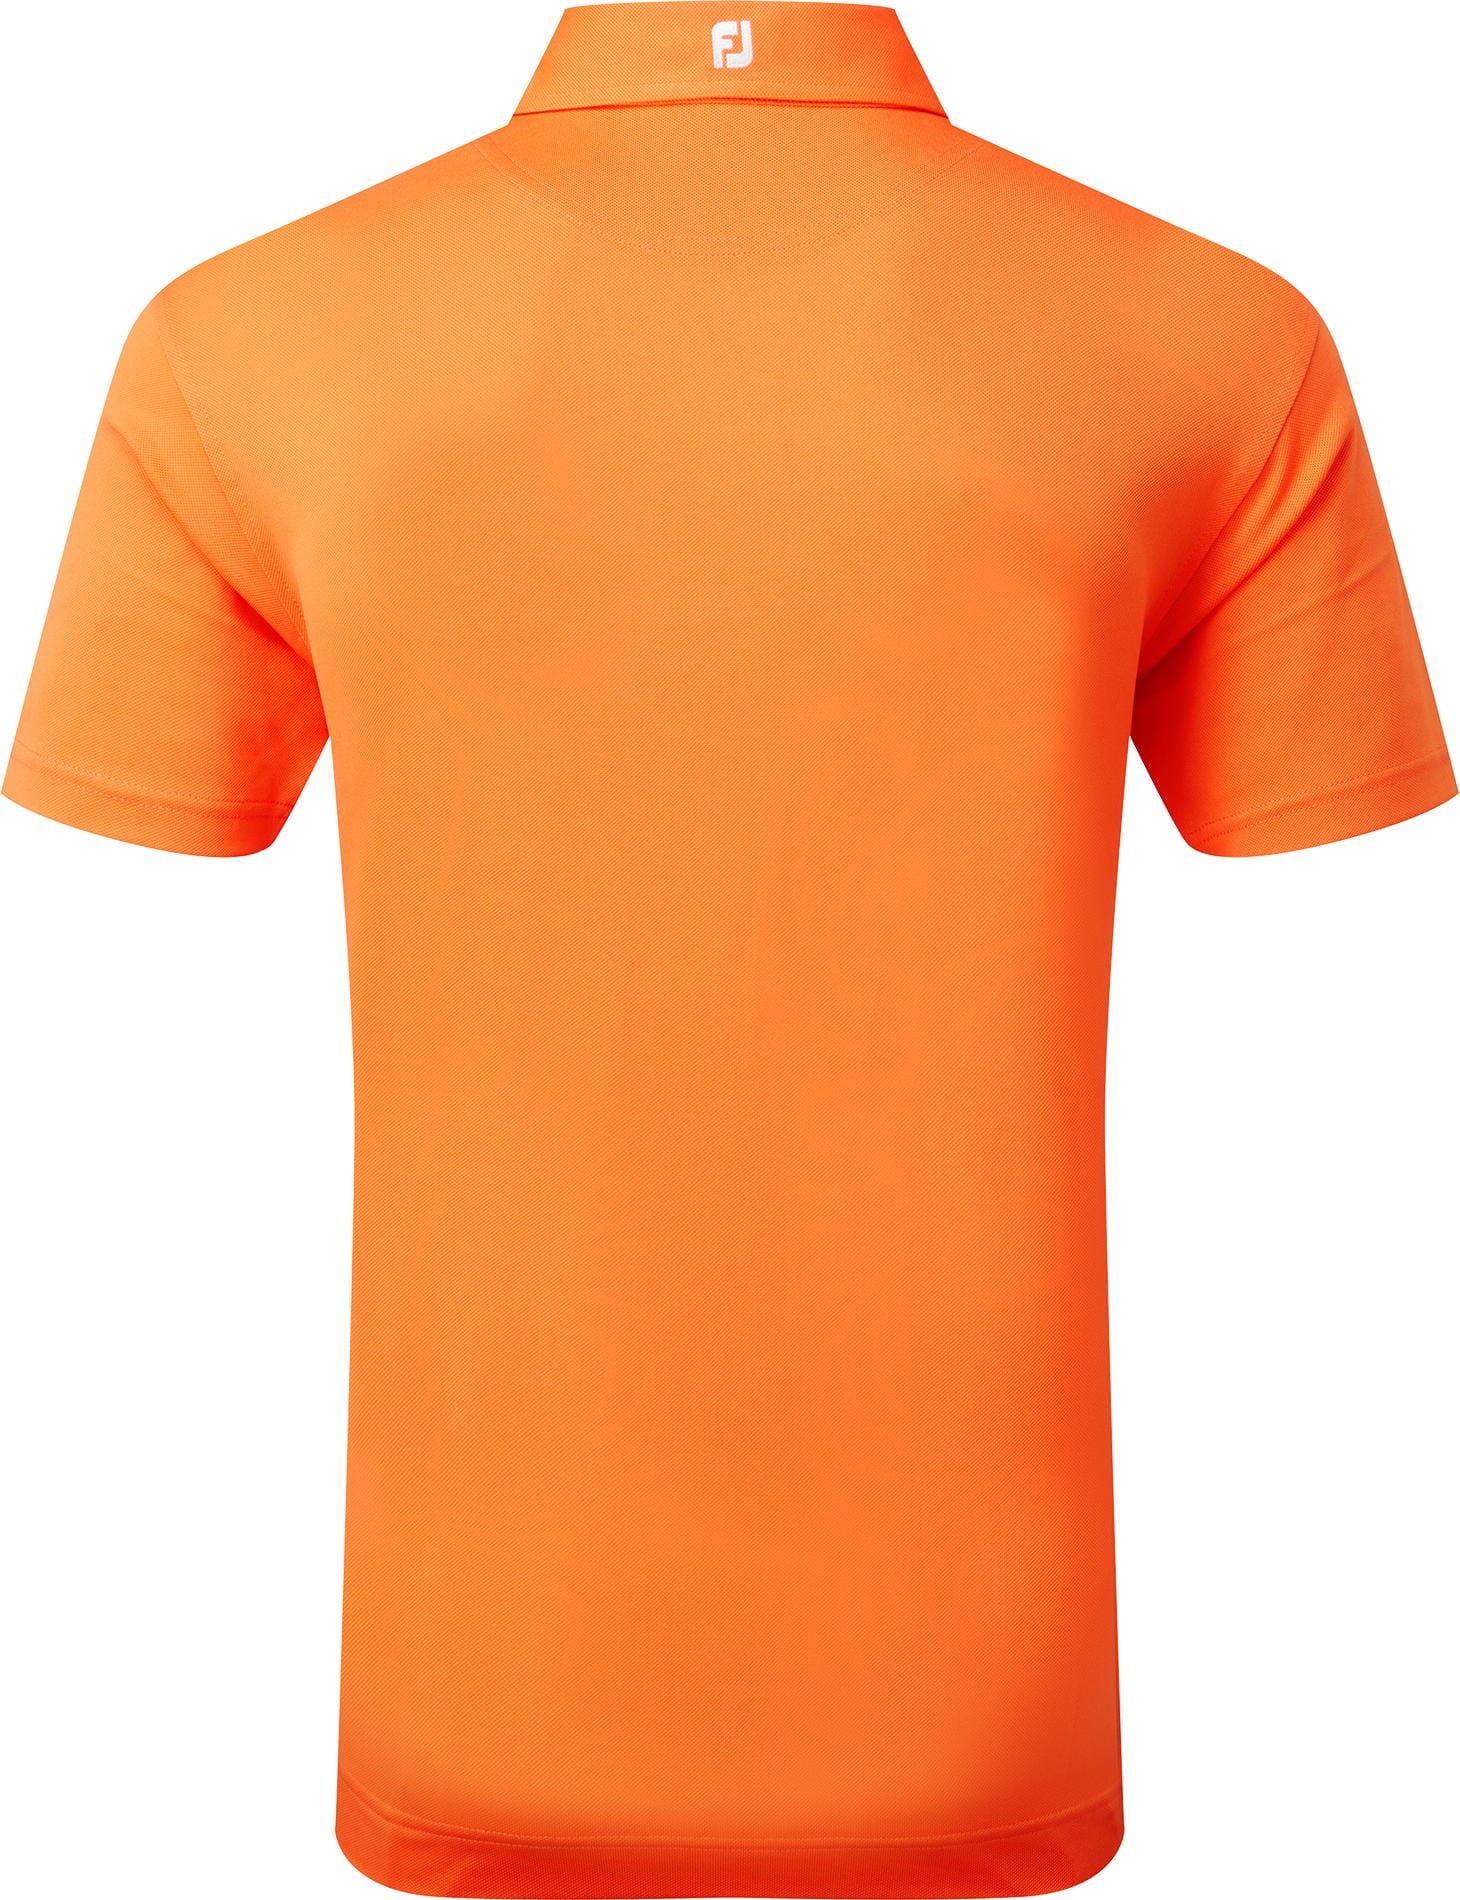 FootJoy Stretch Pique Solid Polo, orange